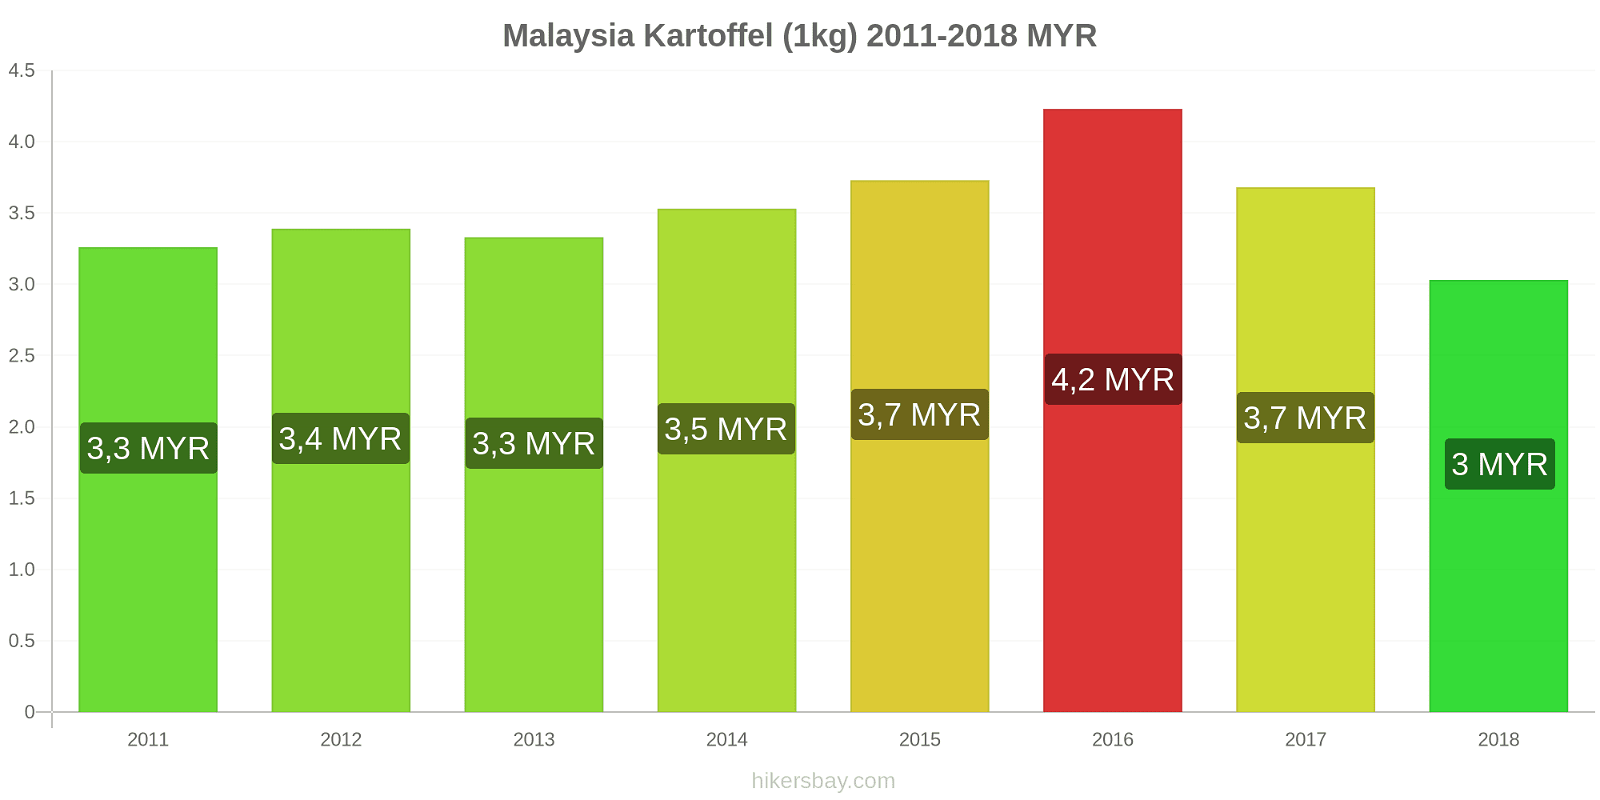 Malaysia Preisänderungen Kartoffeln (1kg) hikersbay.com